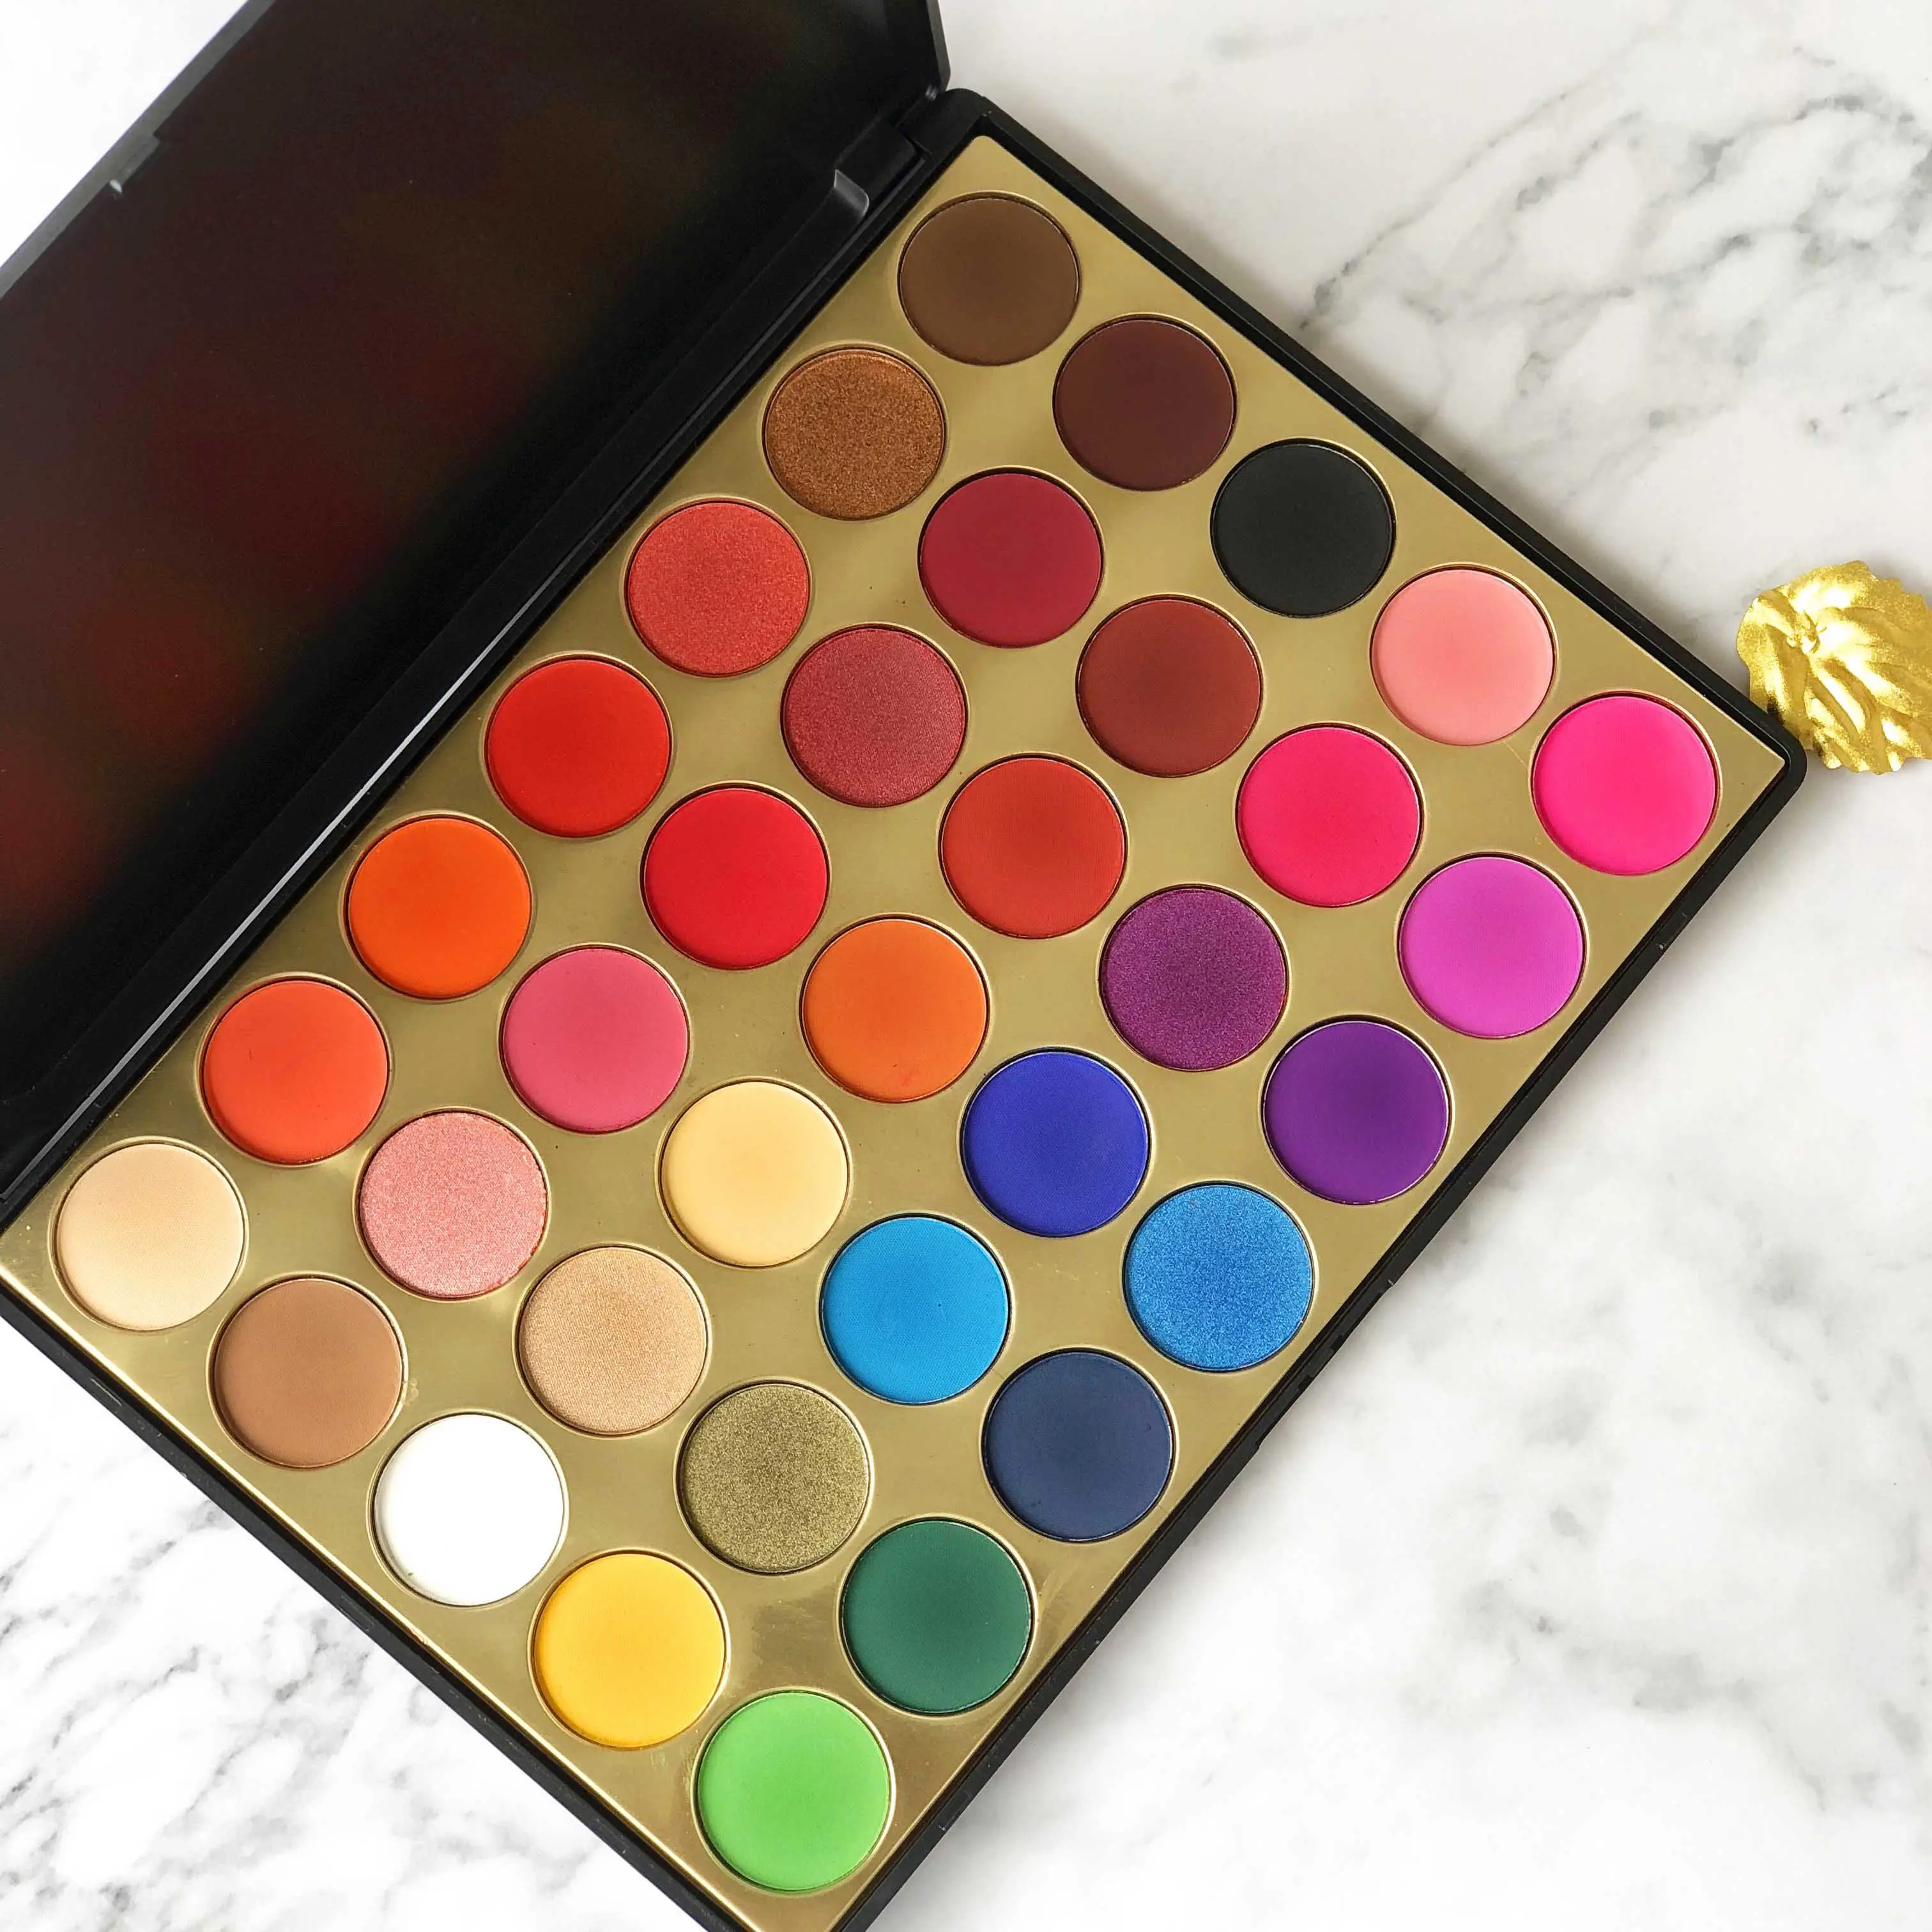 2019 Newest 35 colors makeup palette no logo pigment eyeshadow palette private label